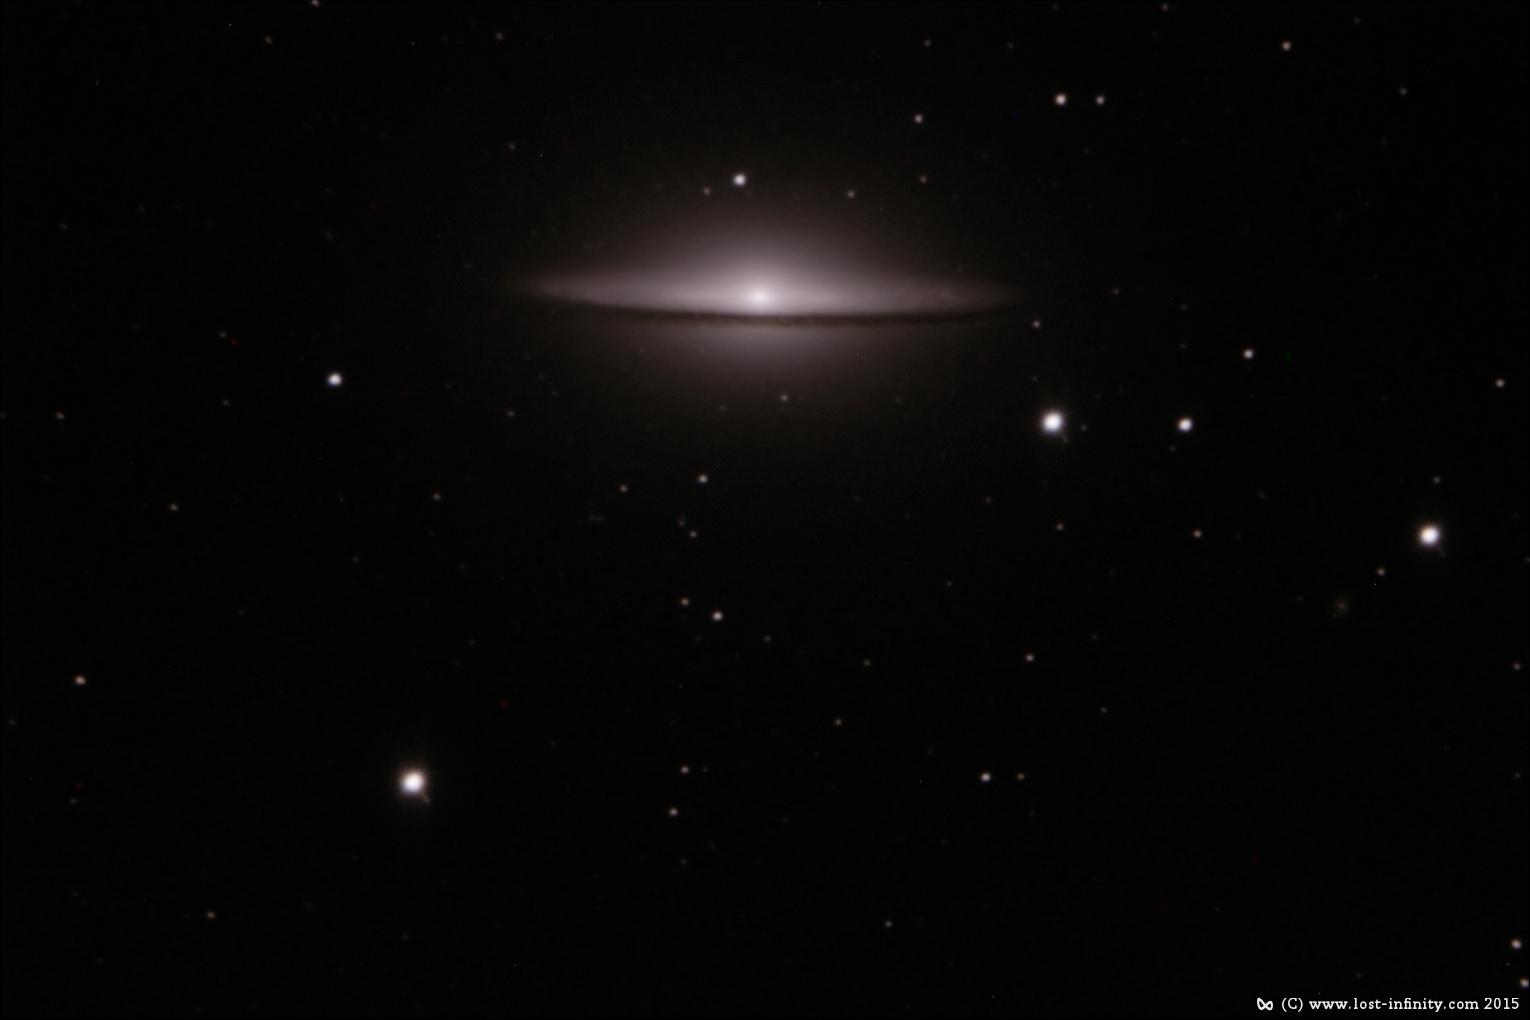 Sobrero galaxy recorded with SBIG camera, Tacande Observatory, La Palma, Spain